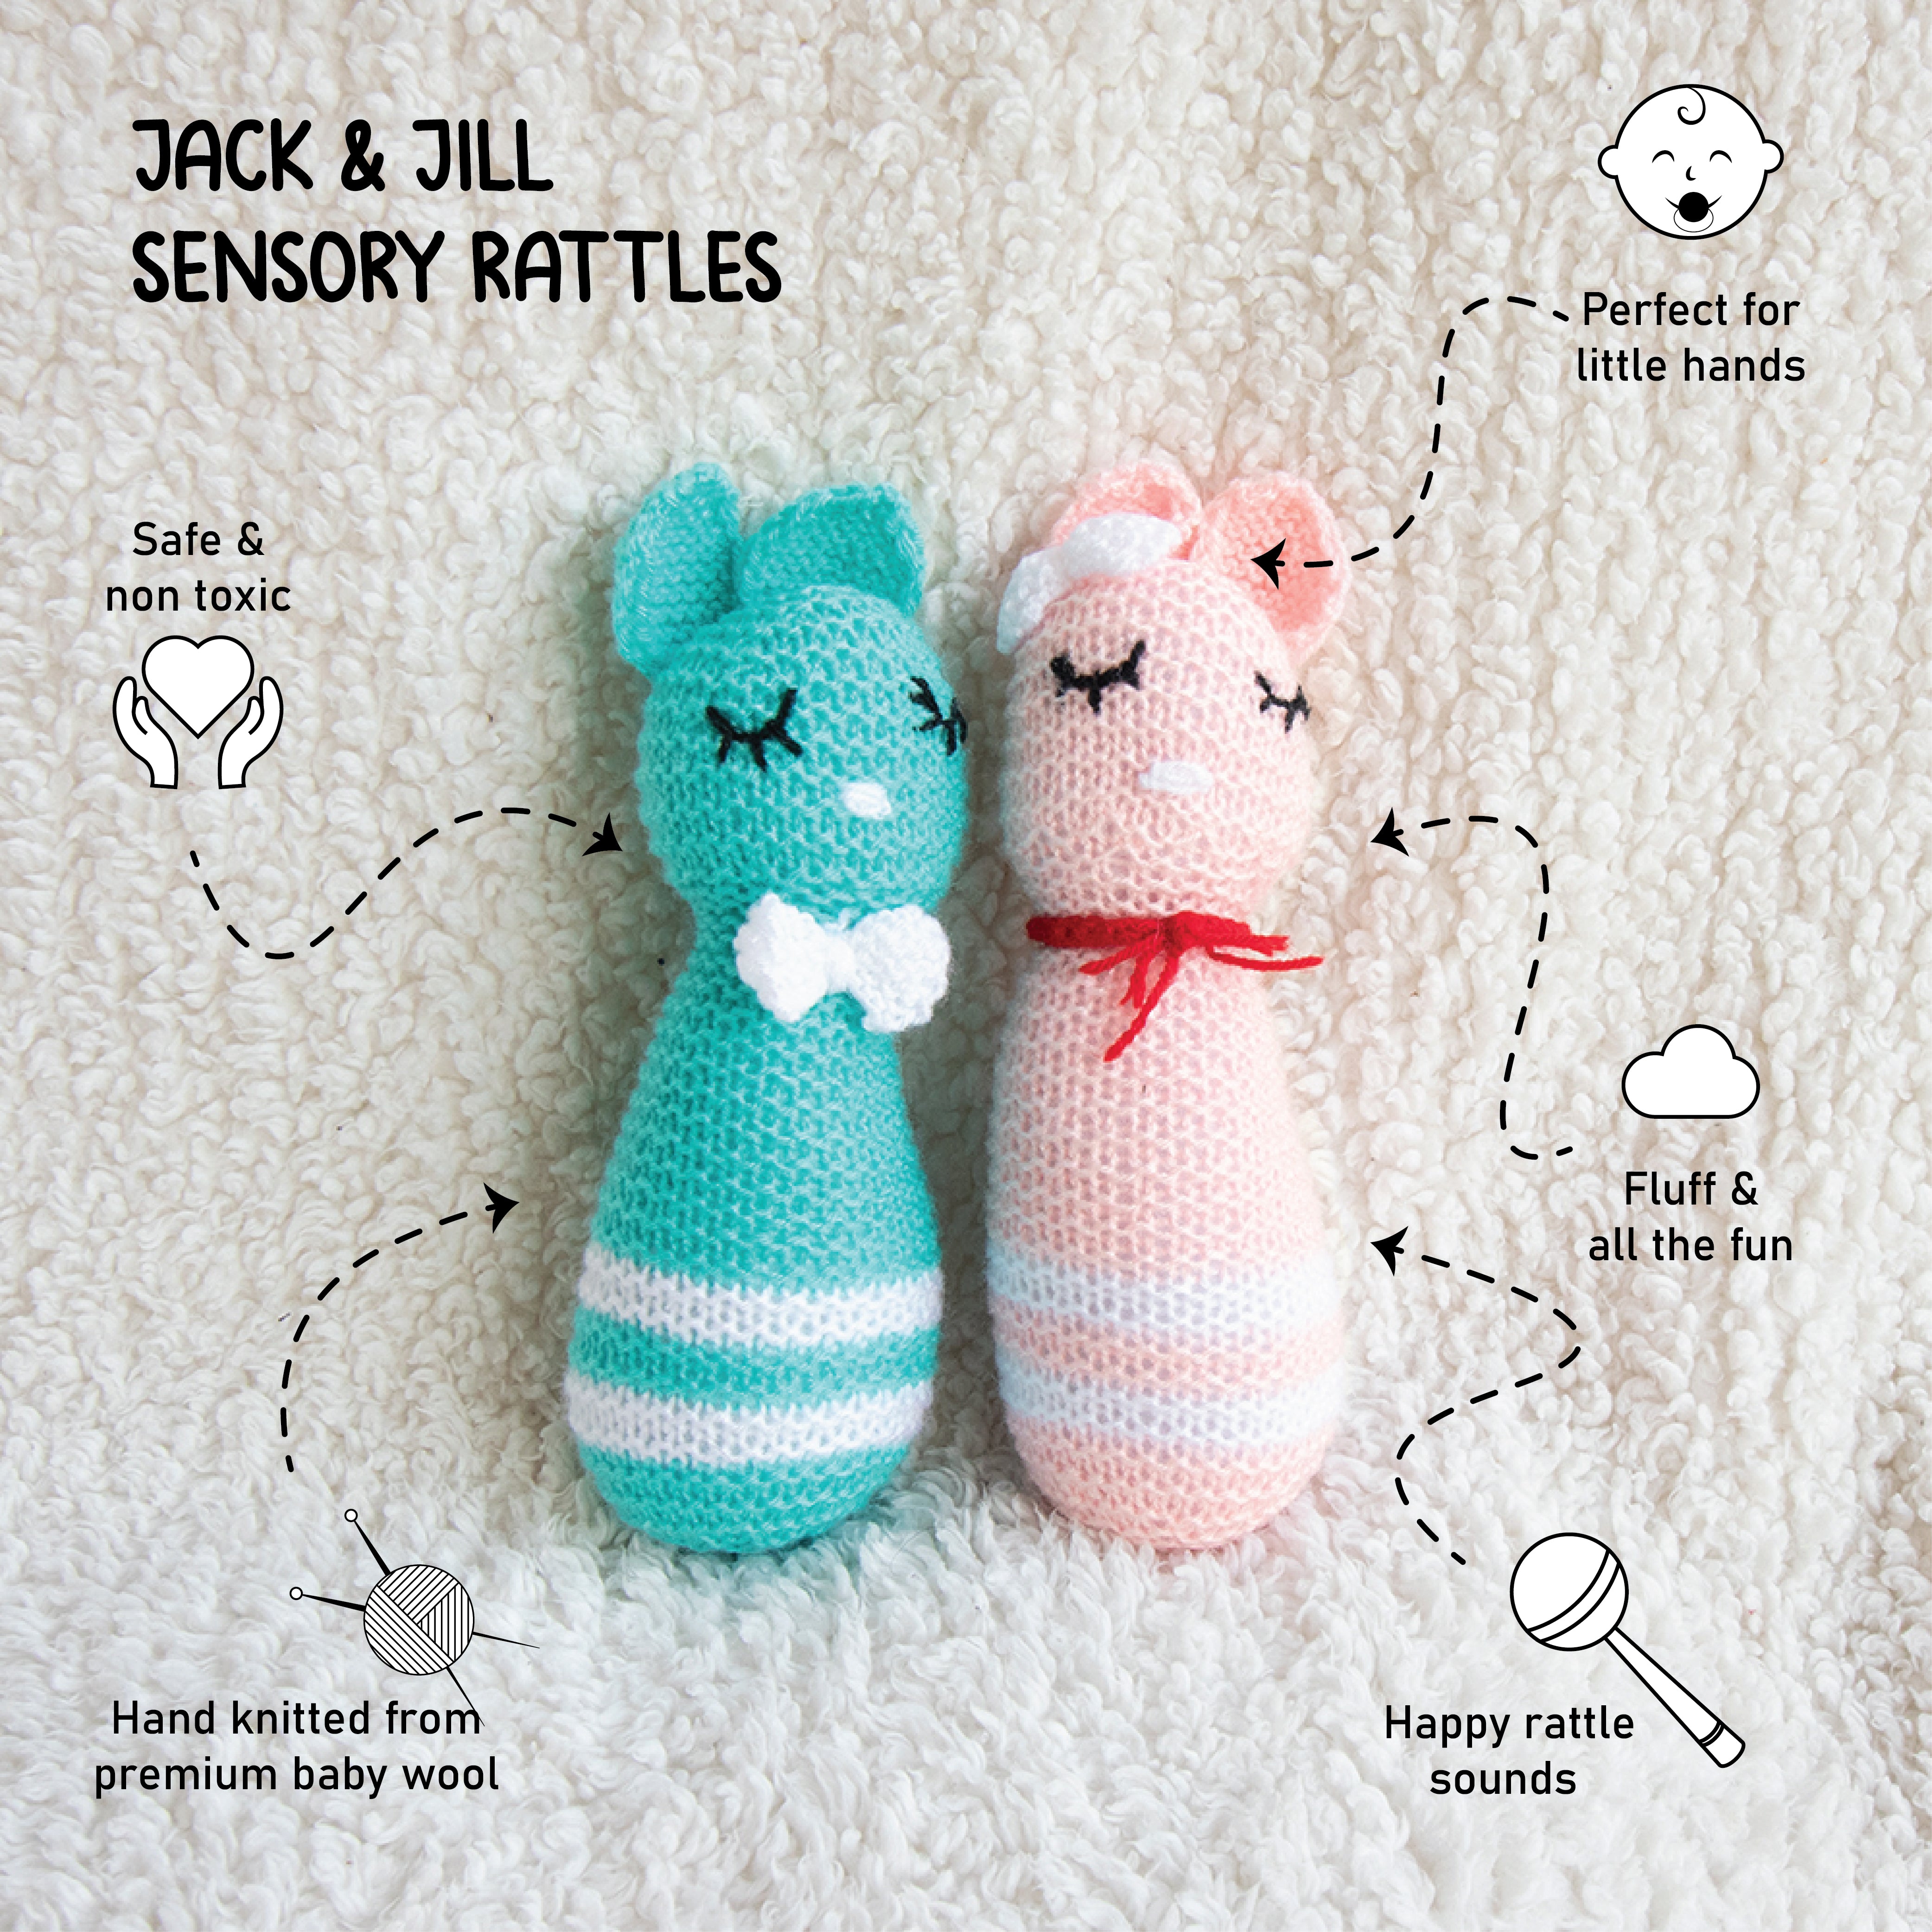 Jack & Jill Sensory Rattles